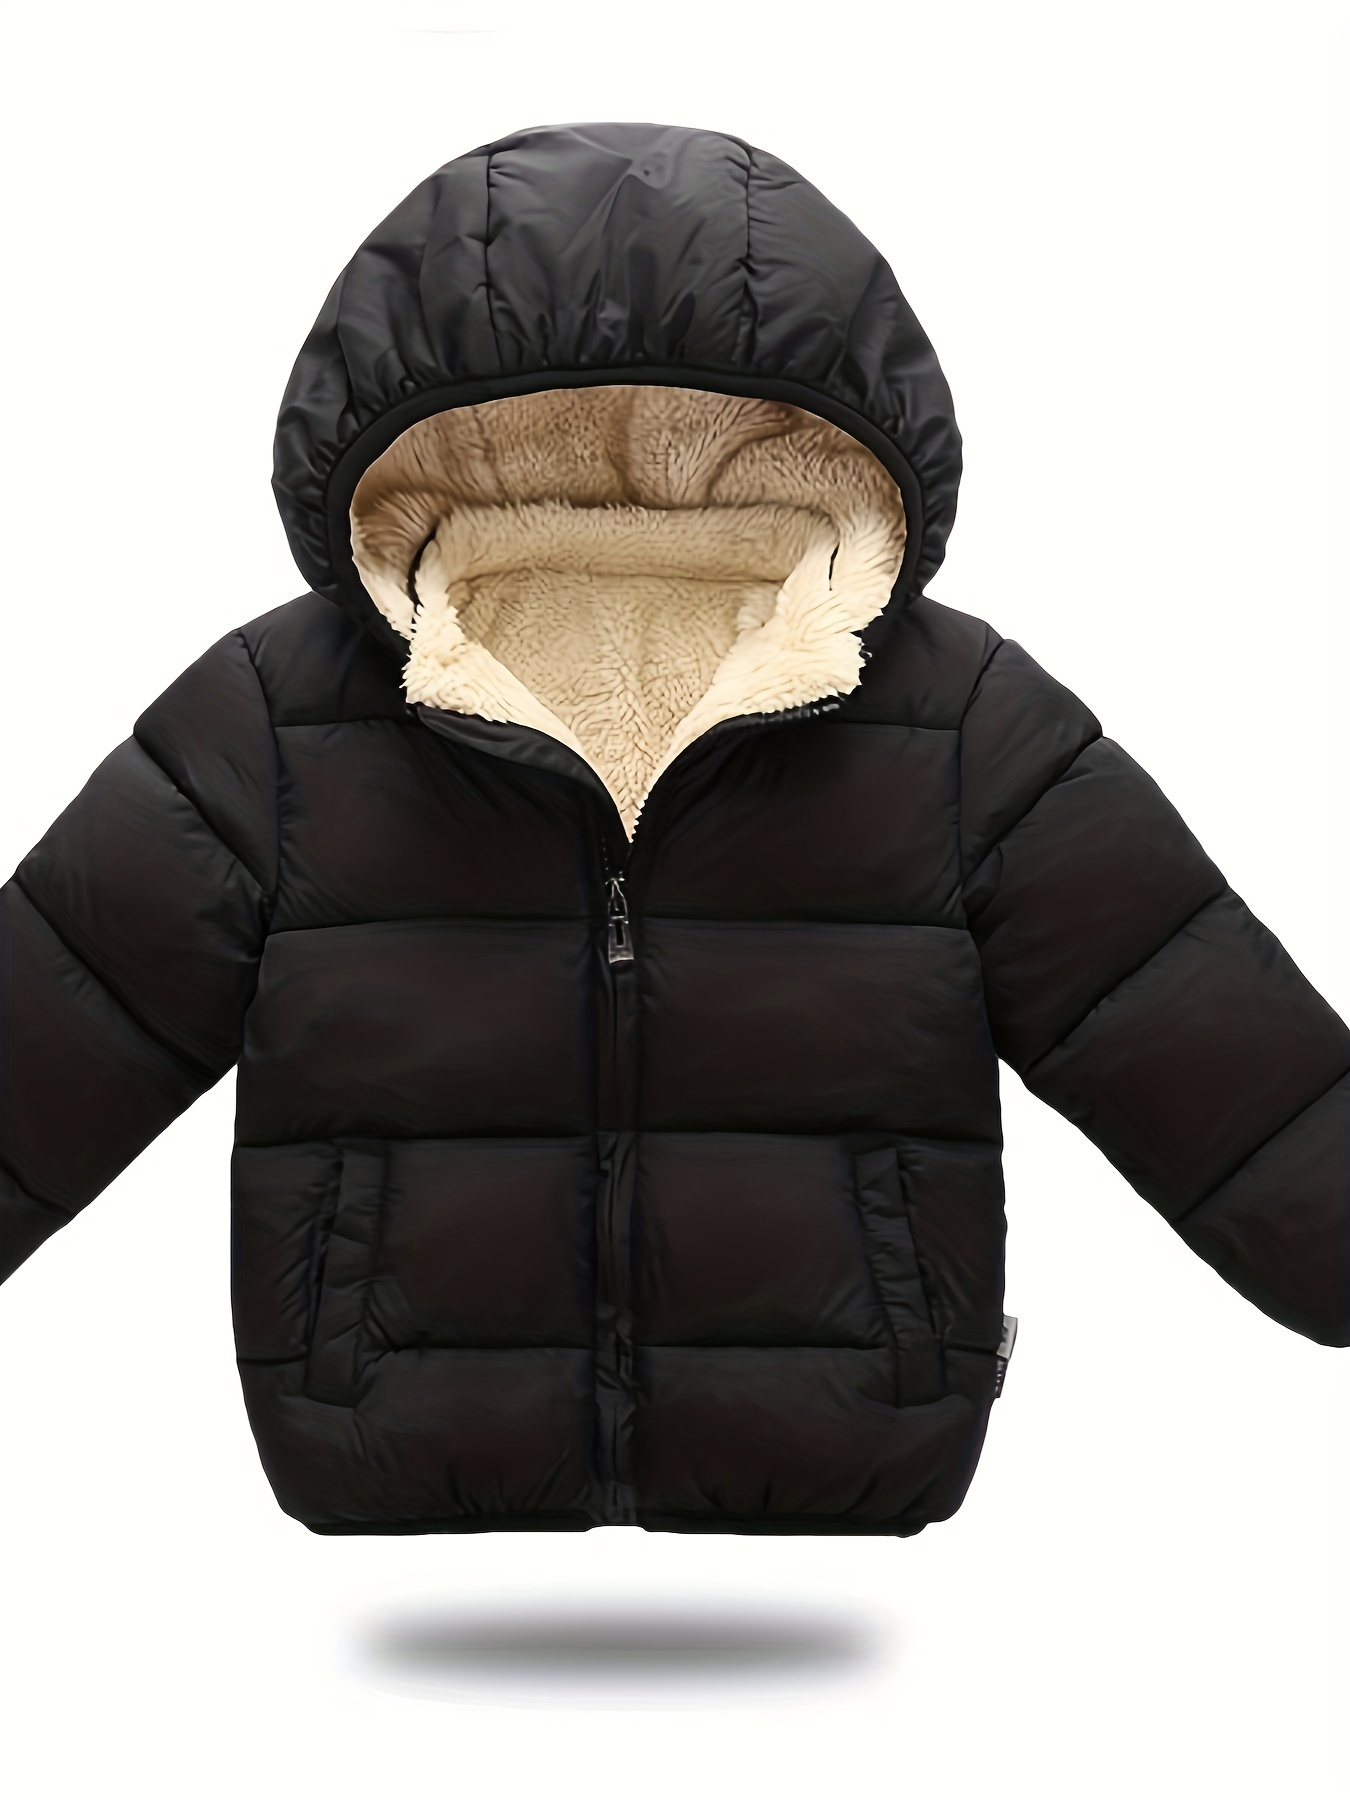 Boys Winter Clothing Fleece Padded Coat Baby Boys' Cotton-Padded